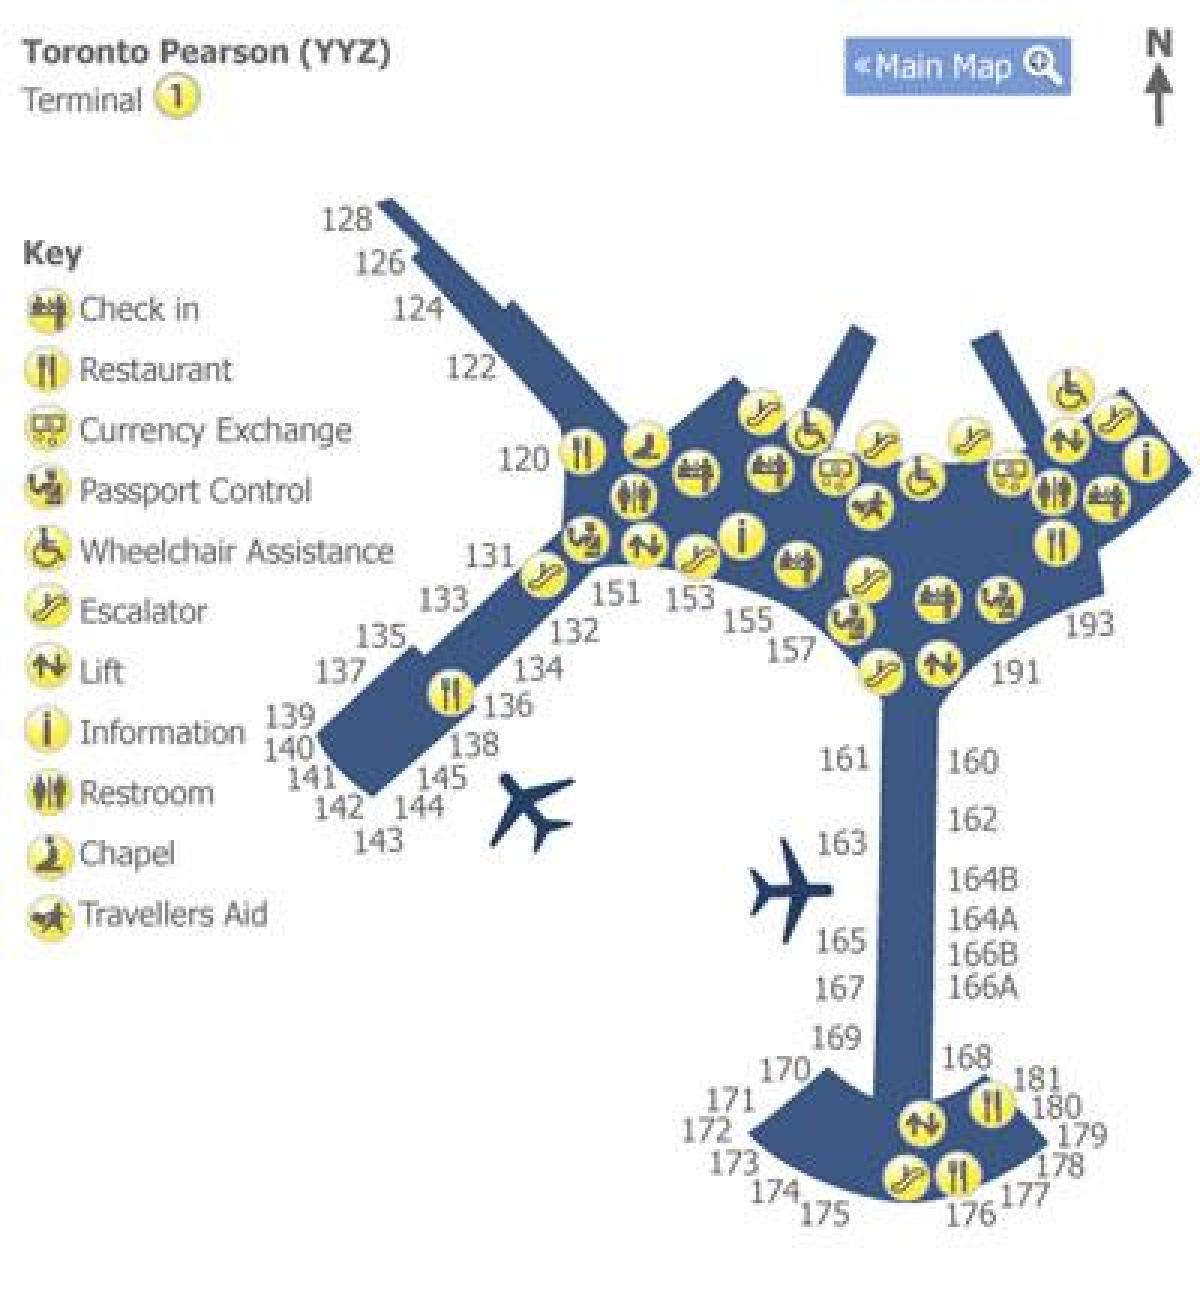 Peta Toronto Pearson terminal lapangan terbang 1